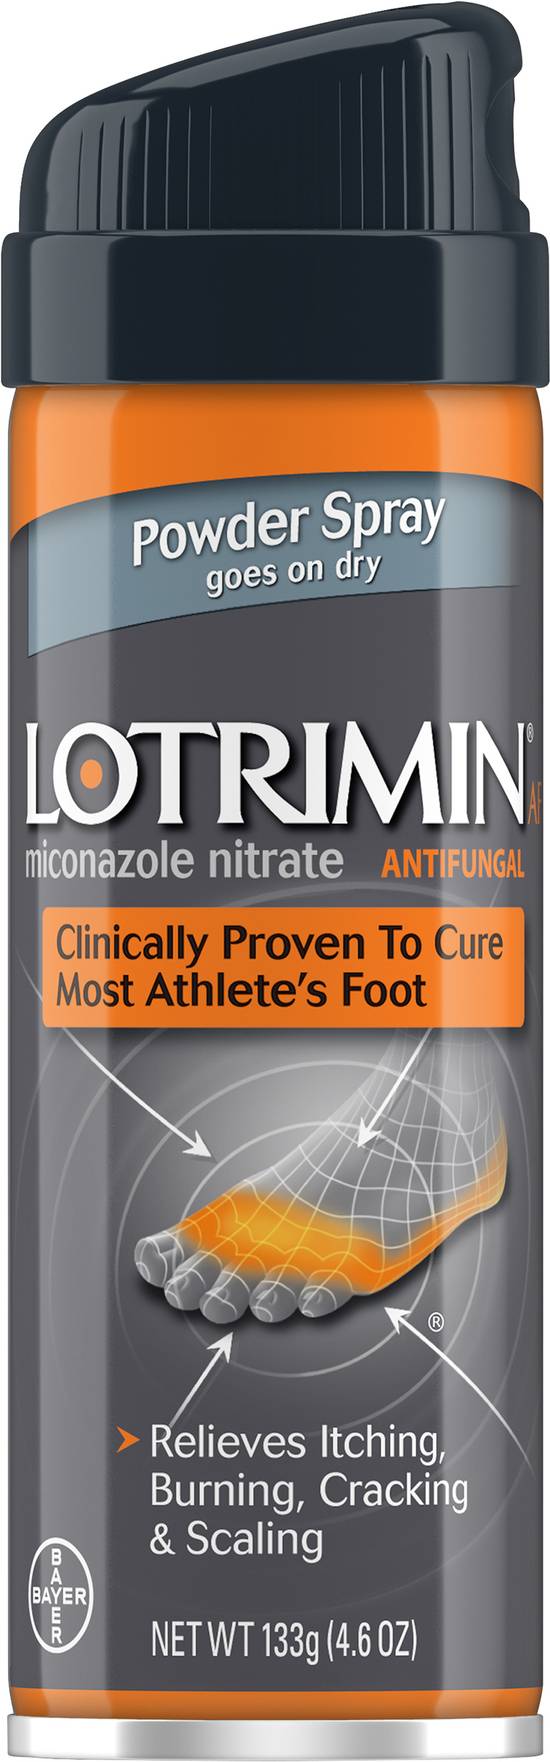 Lotrimin Antifungal Powder Spray For Athlete's Foot